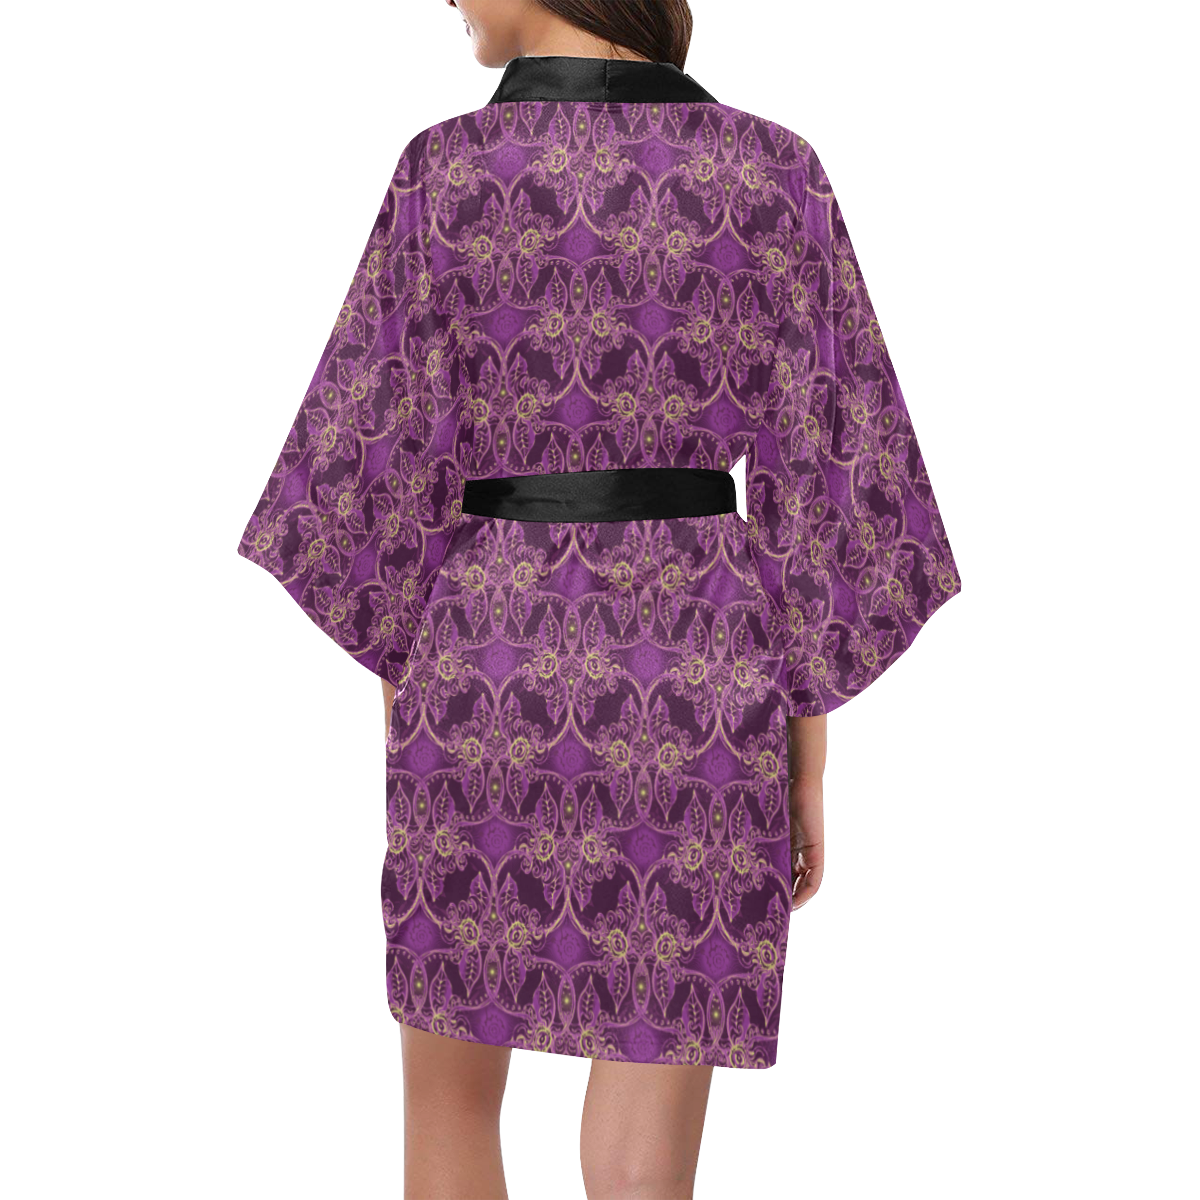 14mj Kimono Robe